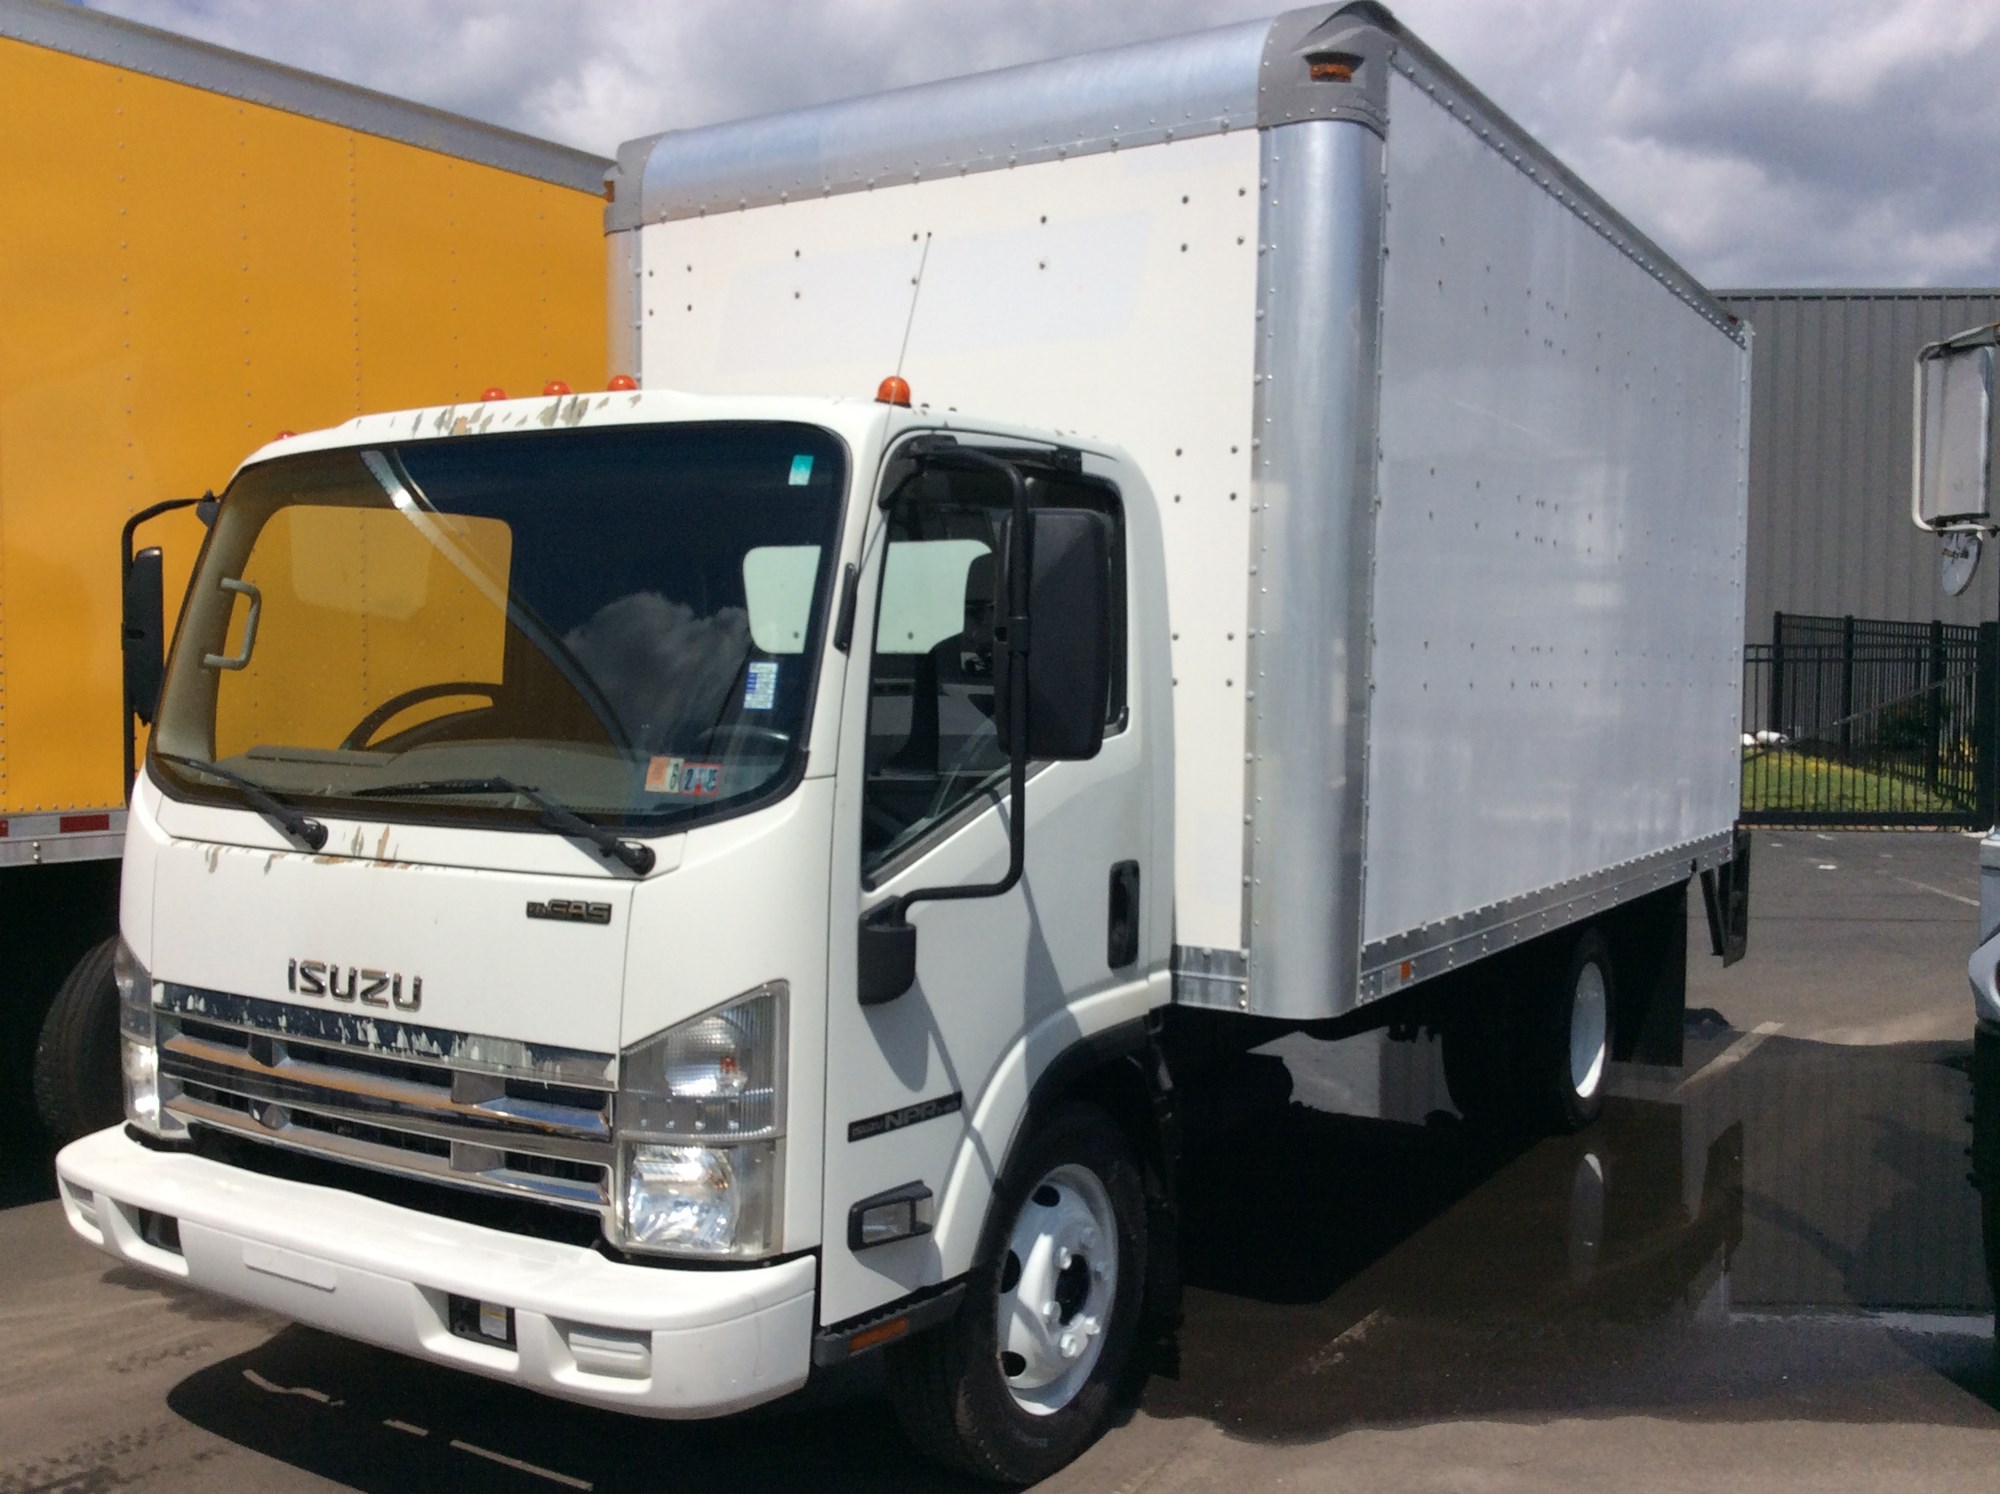 Isuzu Trucks Inventory - 1022580 01 - 9